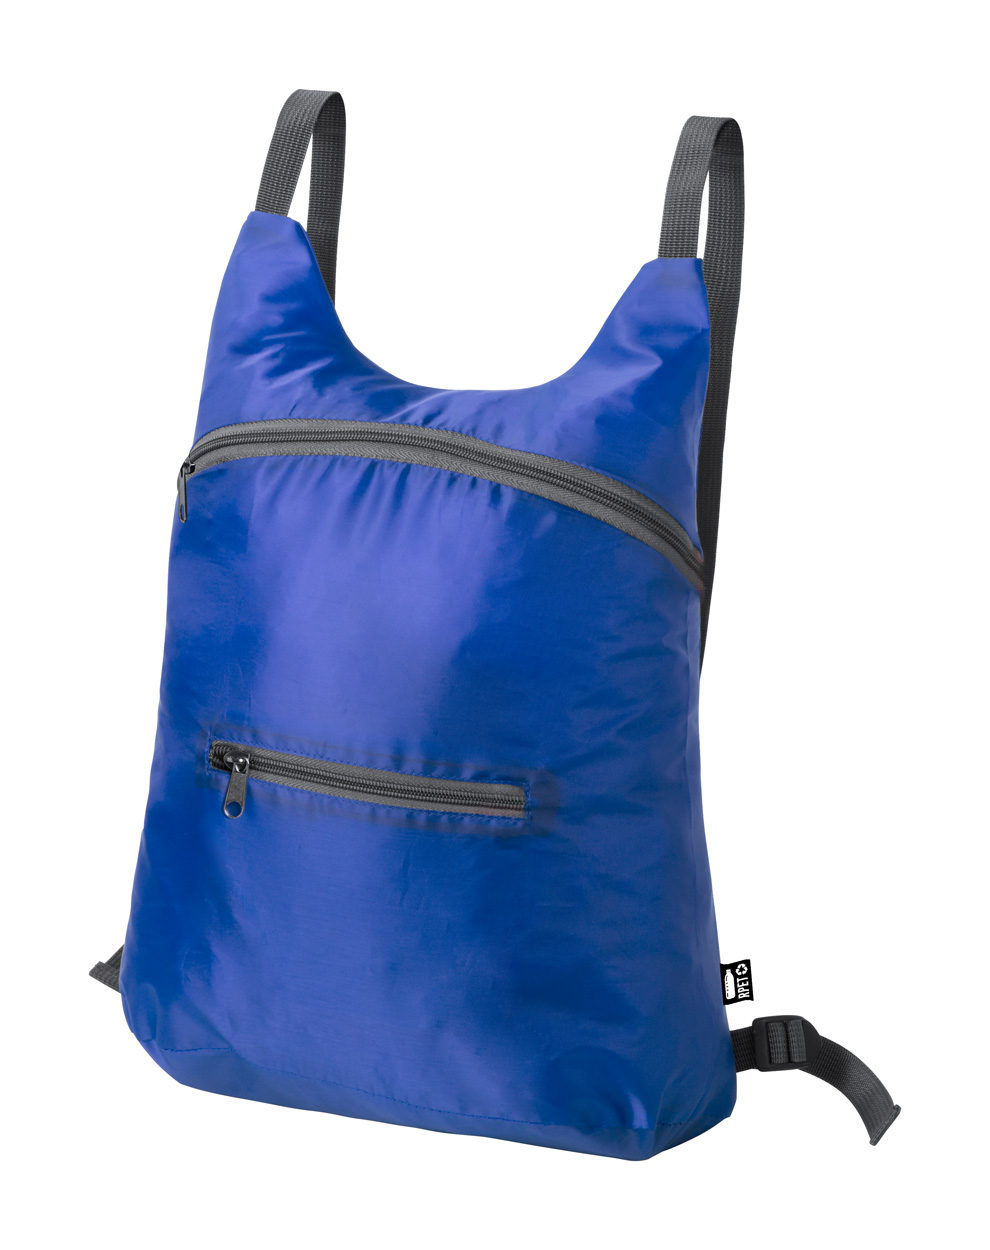 Brocky folding RPET backpack - blue